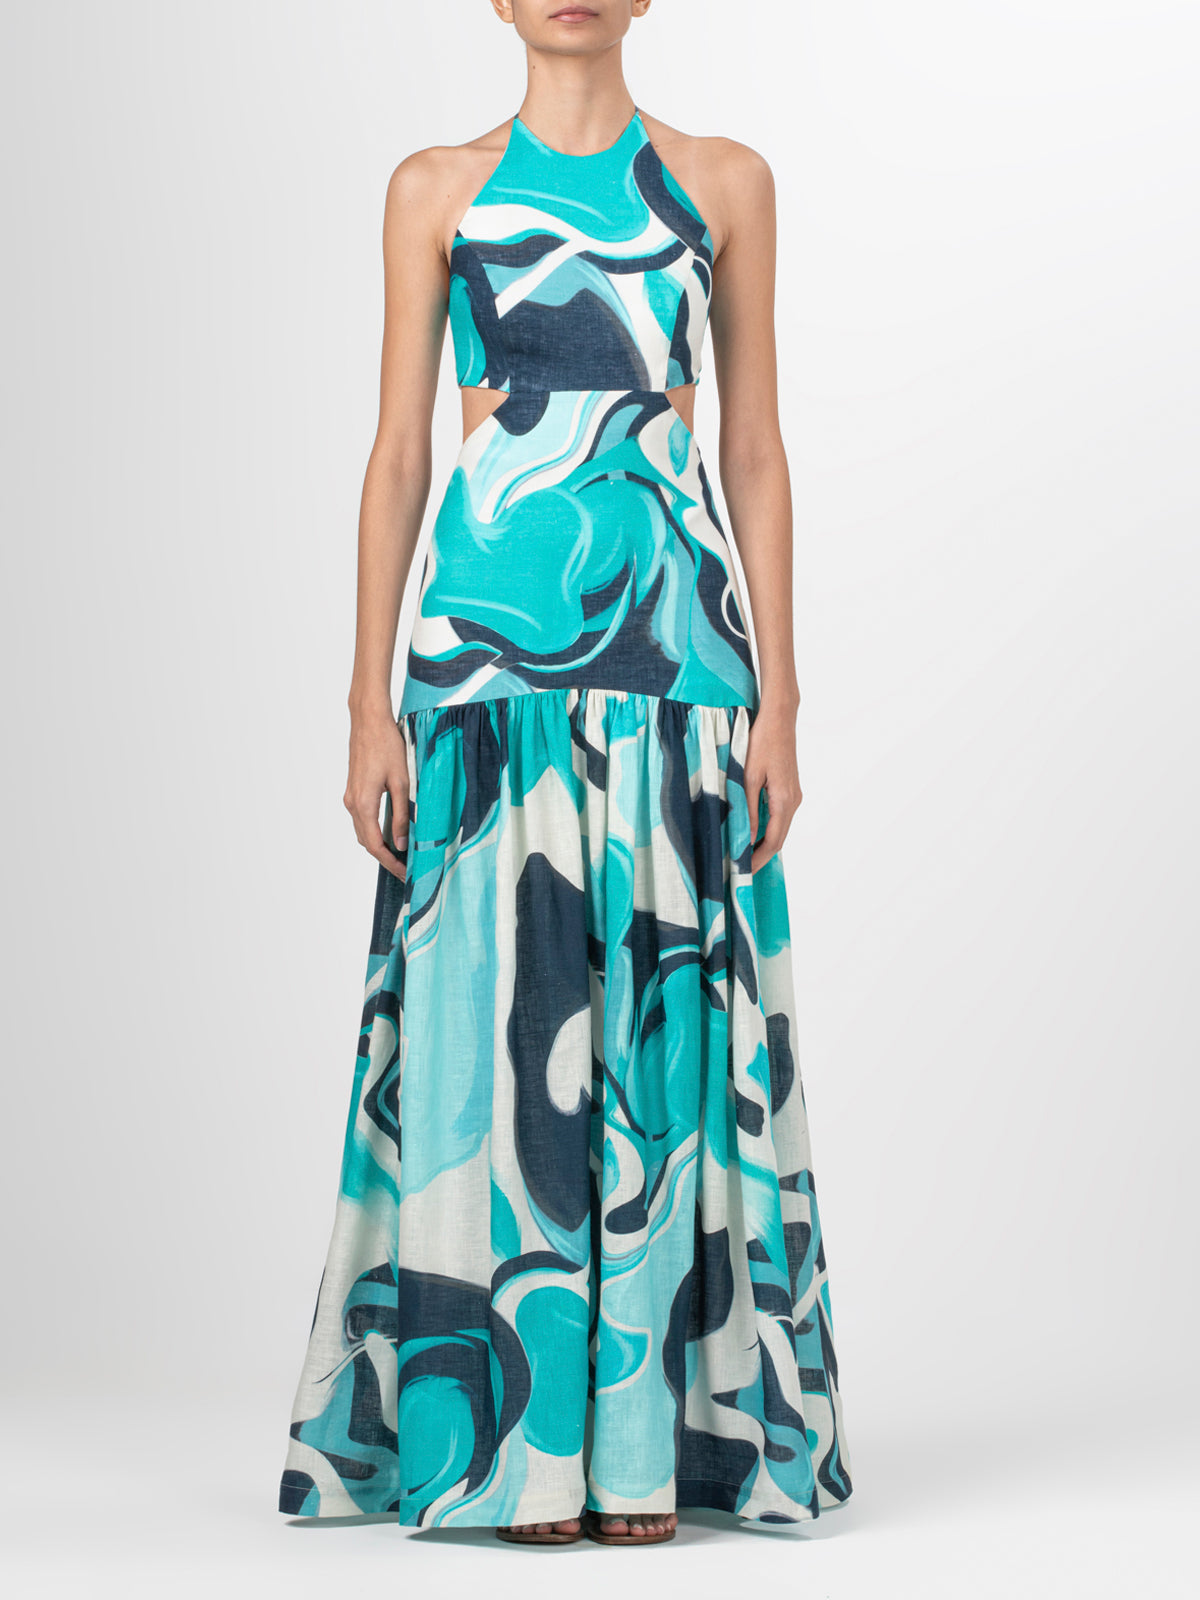 A Rosalia halter dress with an abstract print.